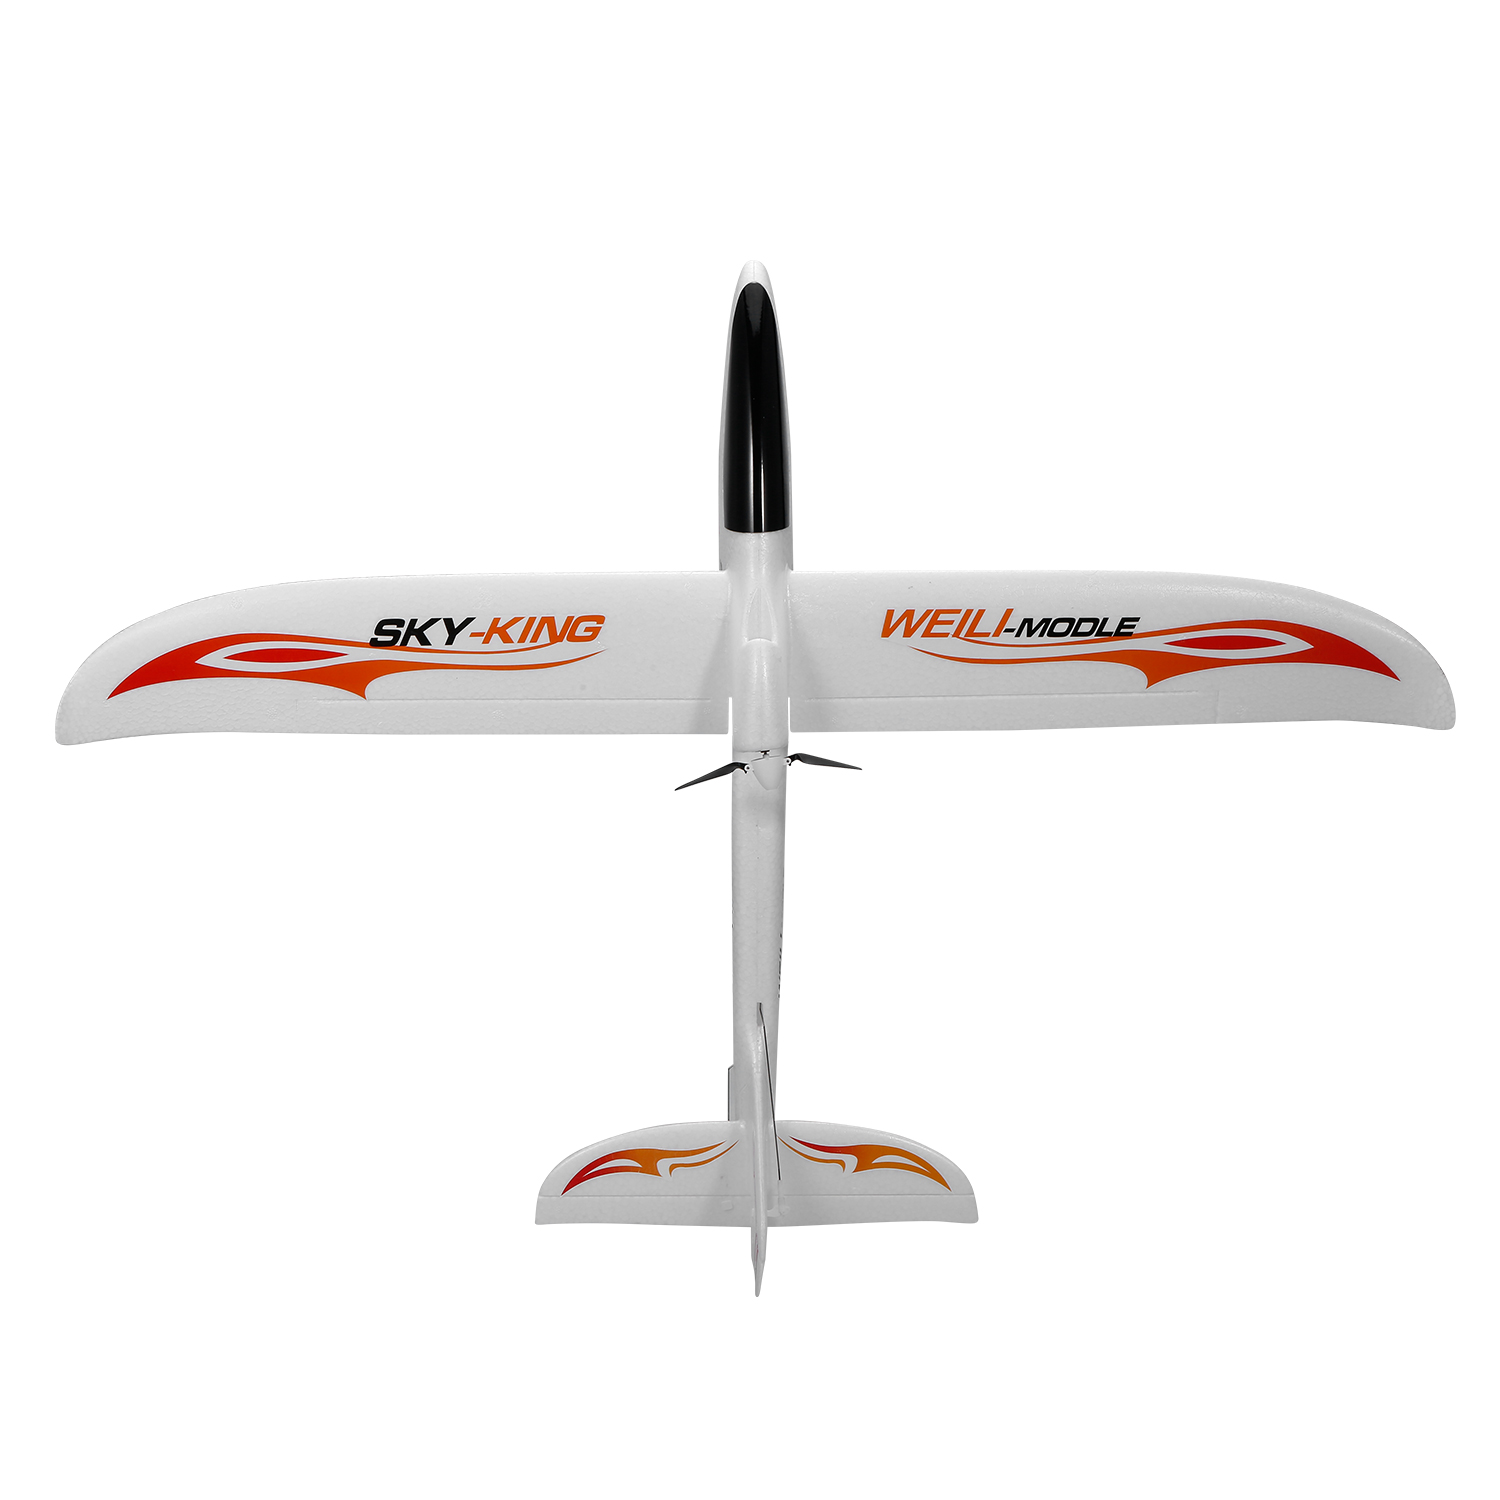 s-idee 01654 Avion F959 Sky King ferngesteuert avec technique 2,4 GHz avec batterie LiPo 